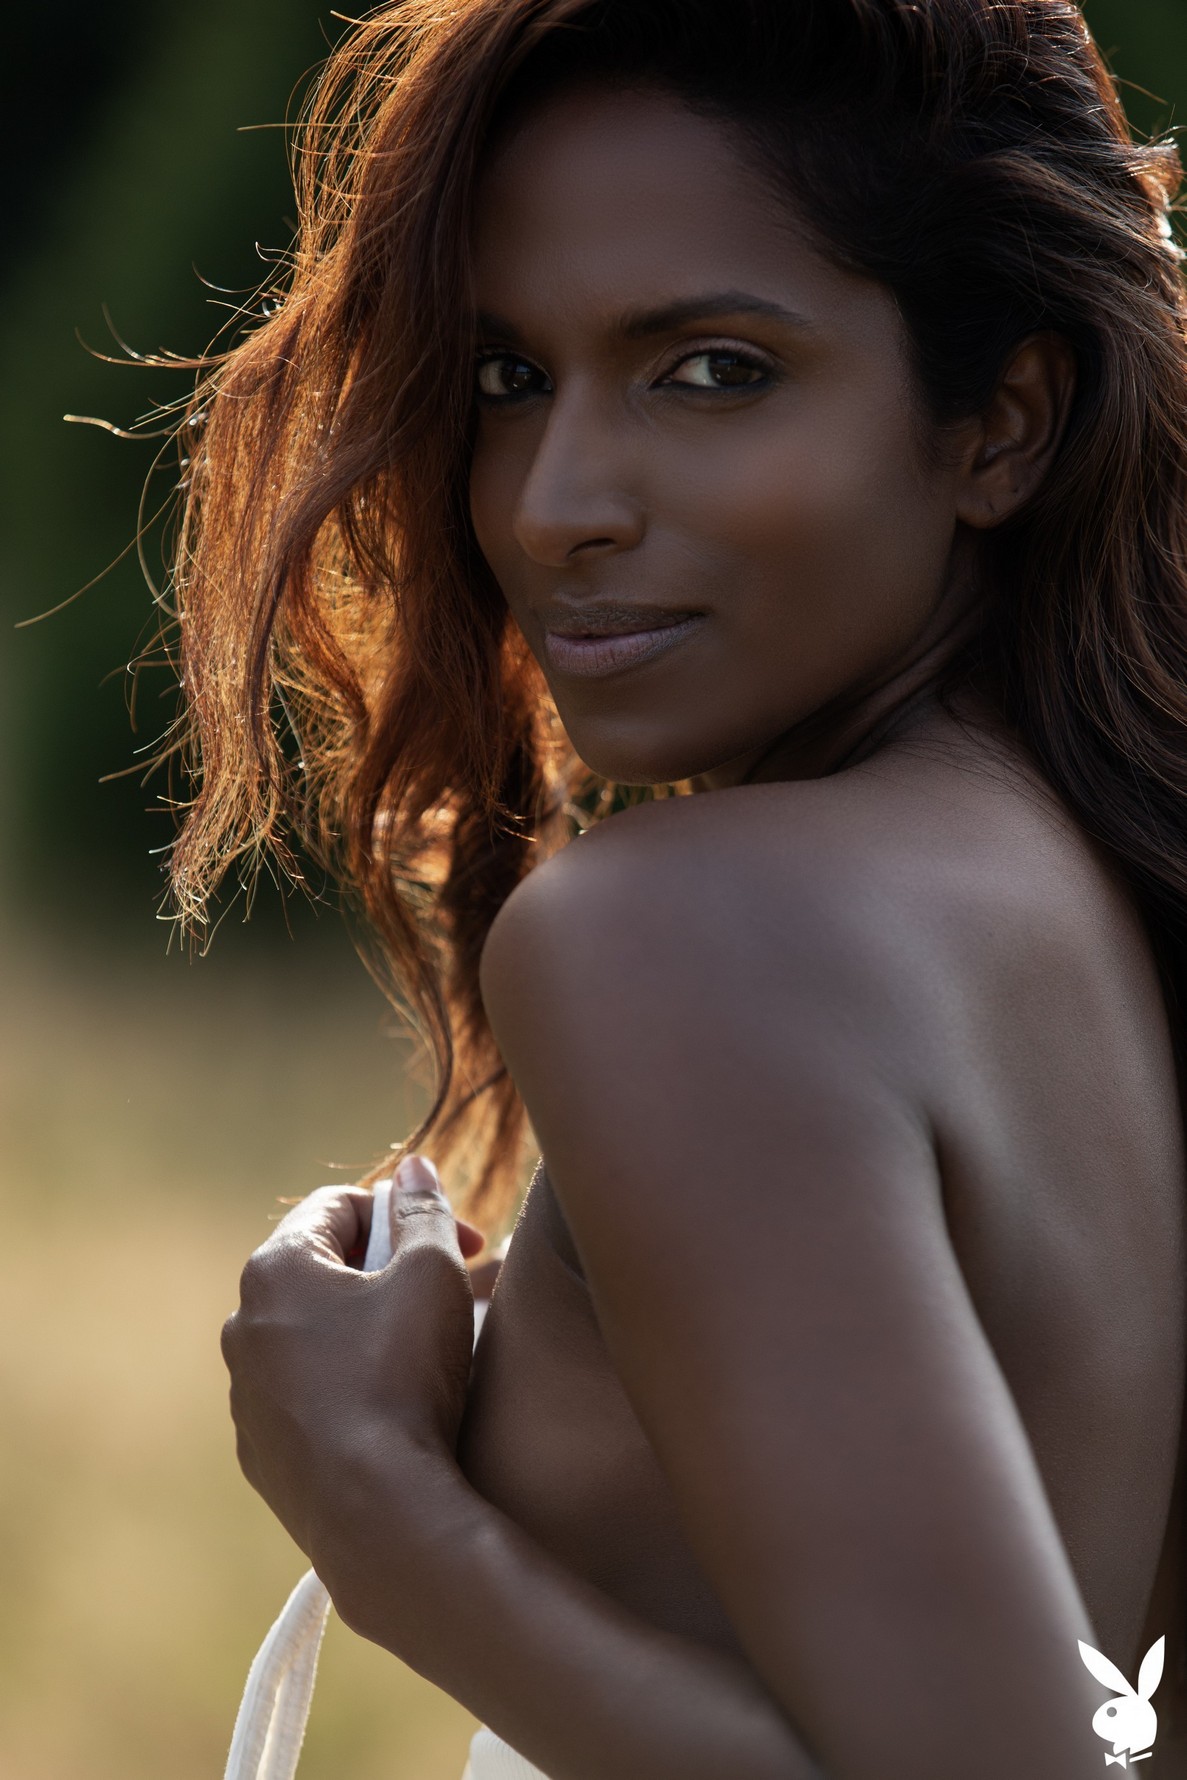 Nirmala Fernandes Nude 6 - Nirmala Fernandes The Fappening Nude (26 Photos)